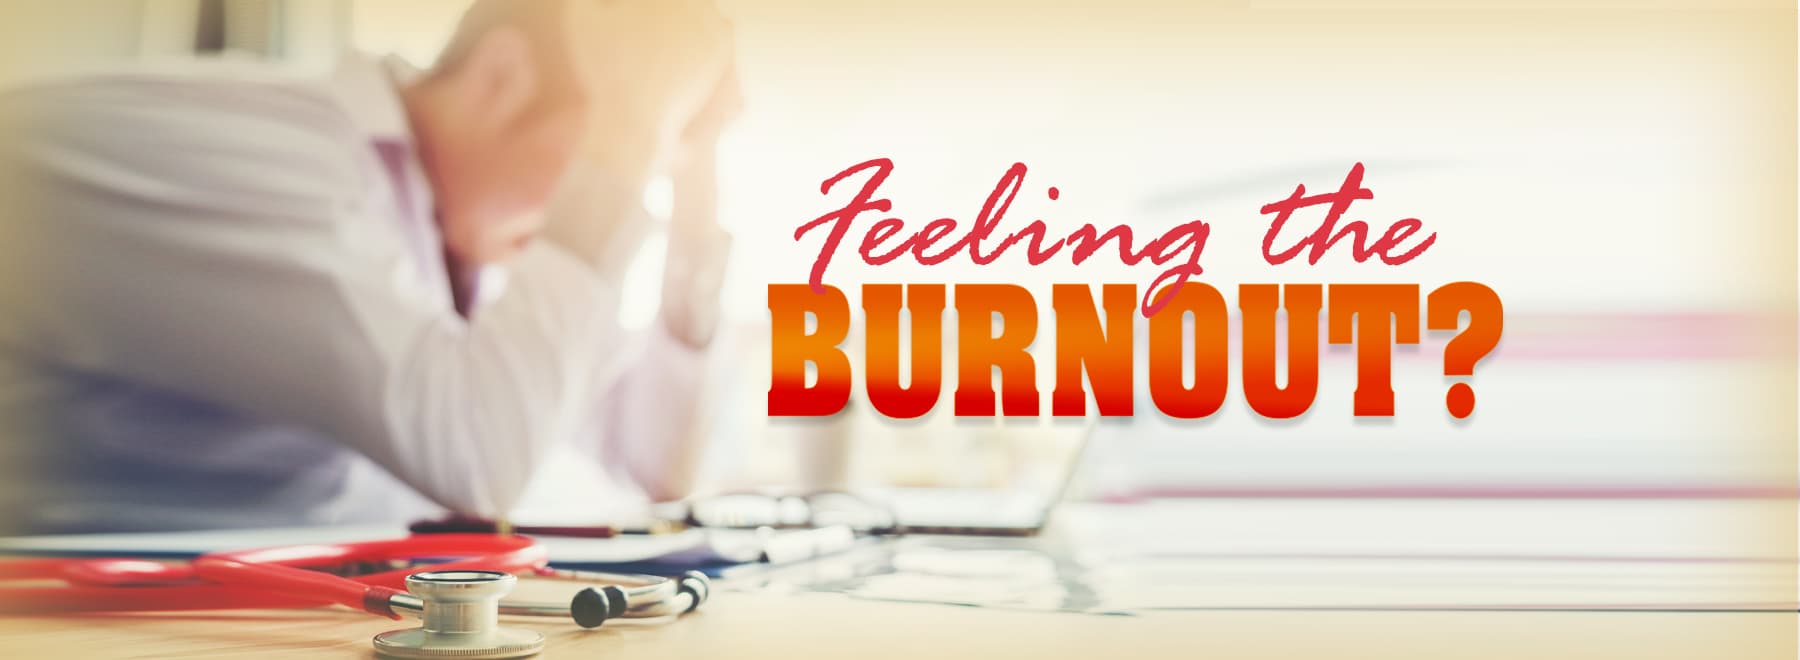 Feeling Burnout? Banner head